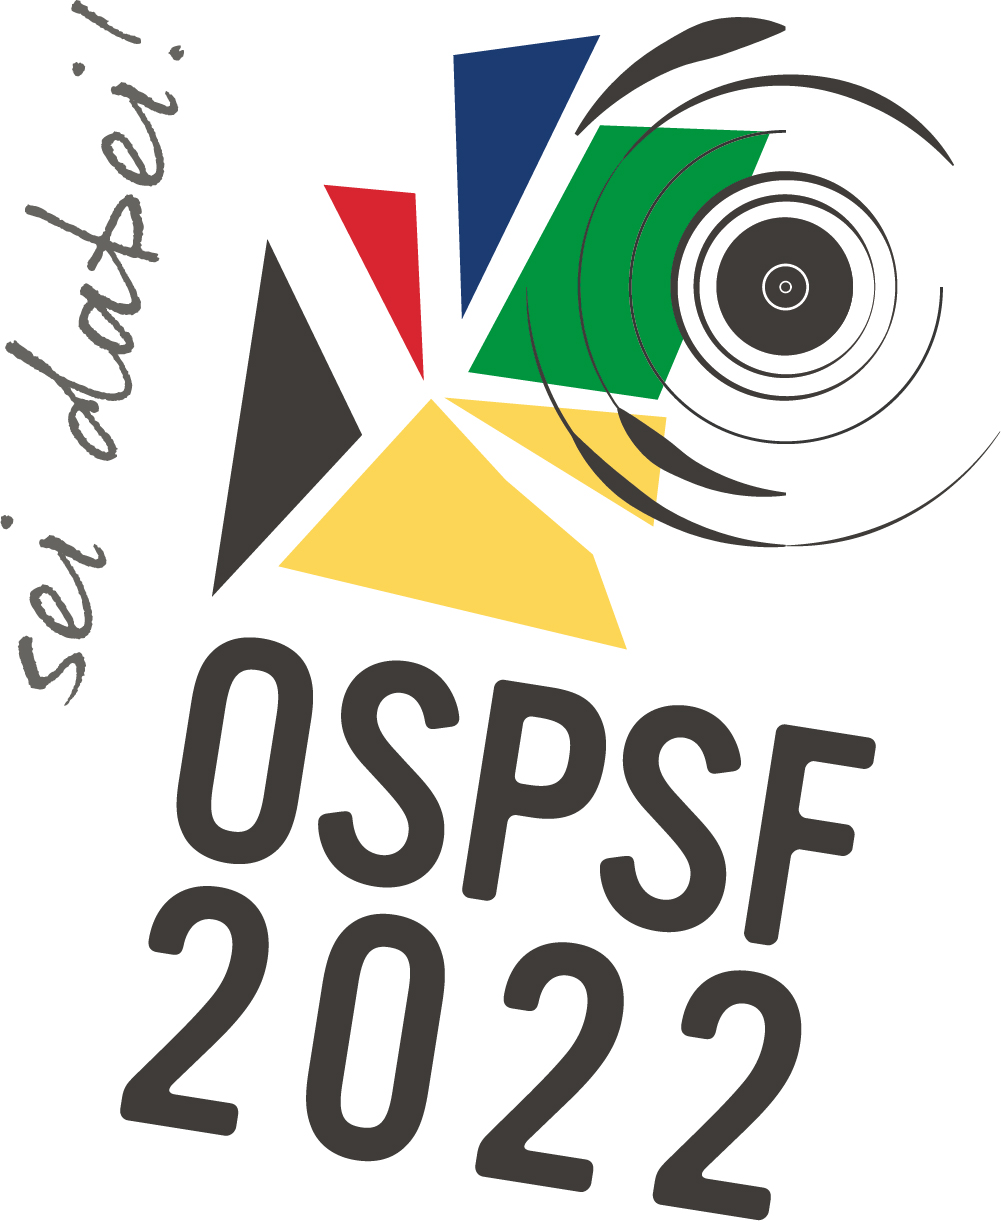 ospsf2022.ospsv.ch